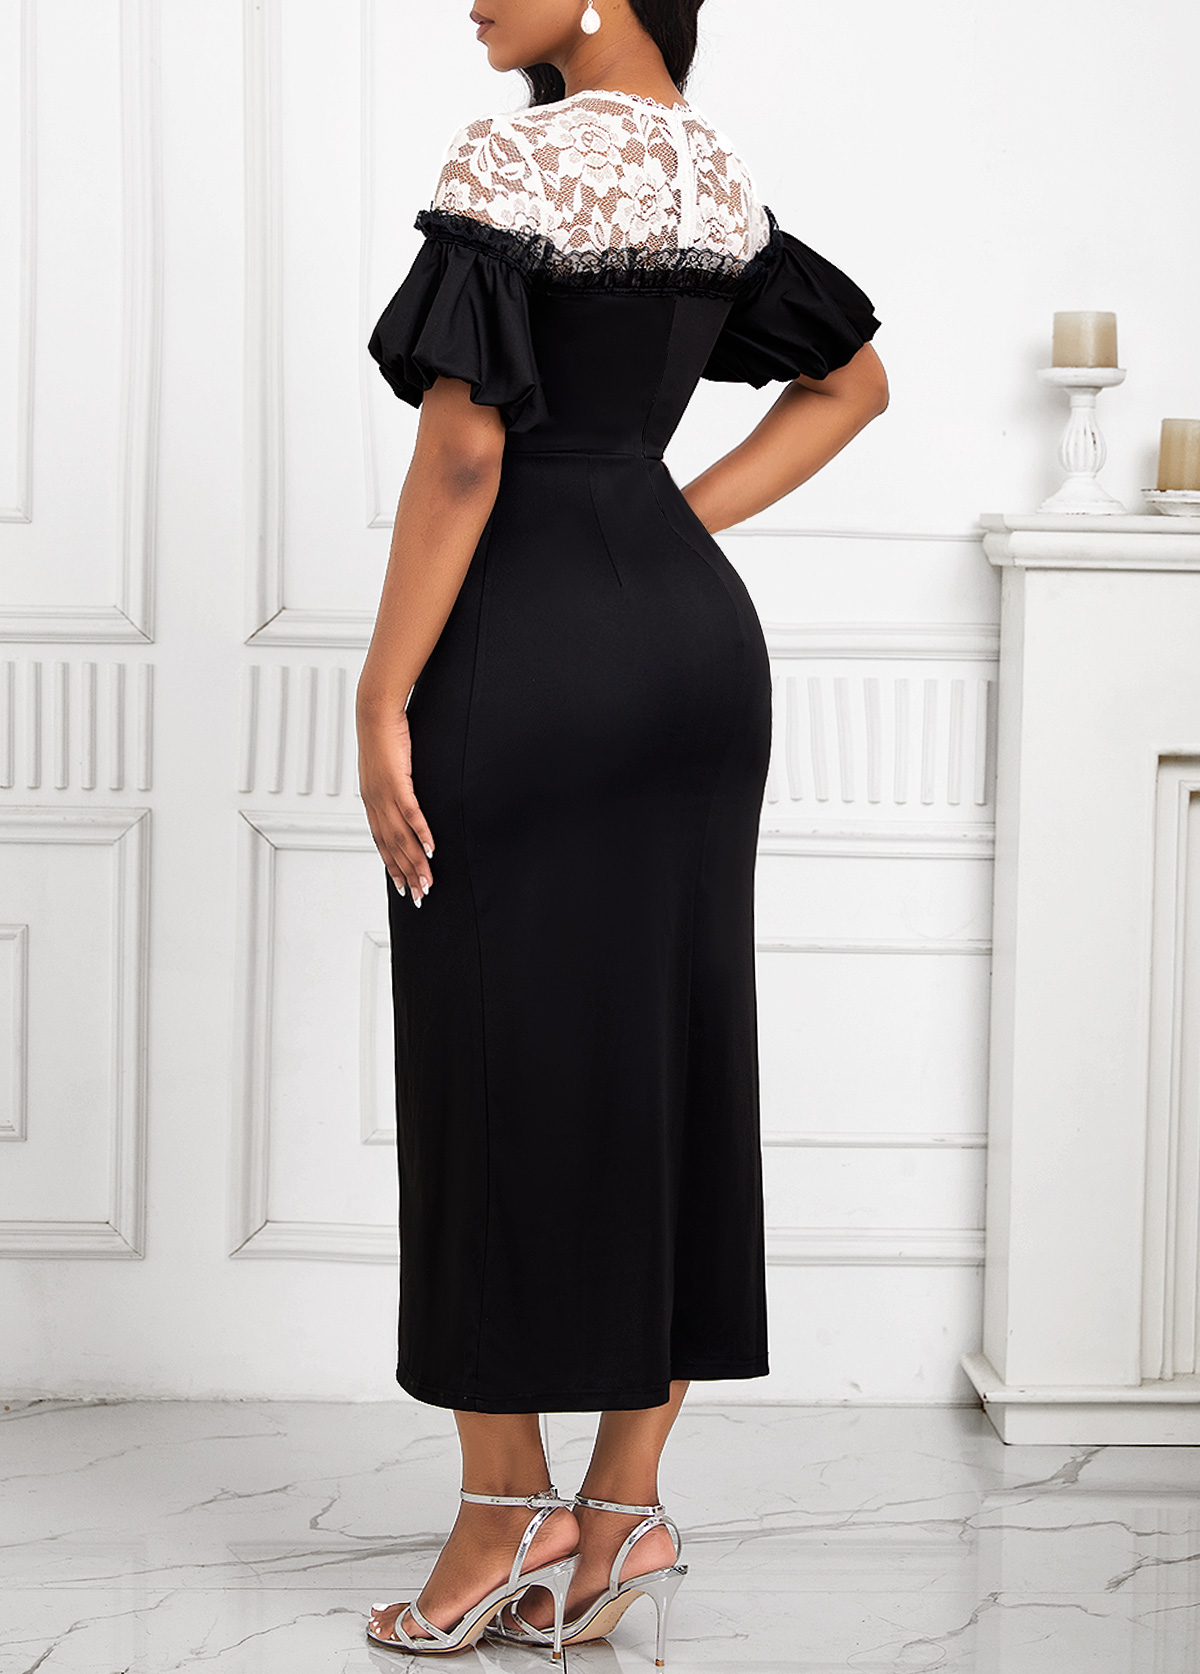 Lace Round Neck Short Sleeve Black Bodycon Dress